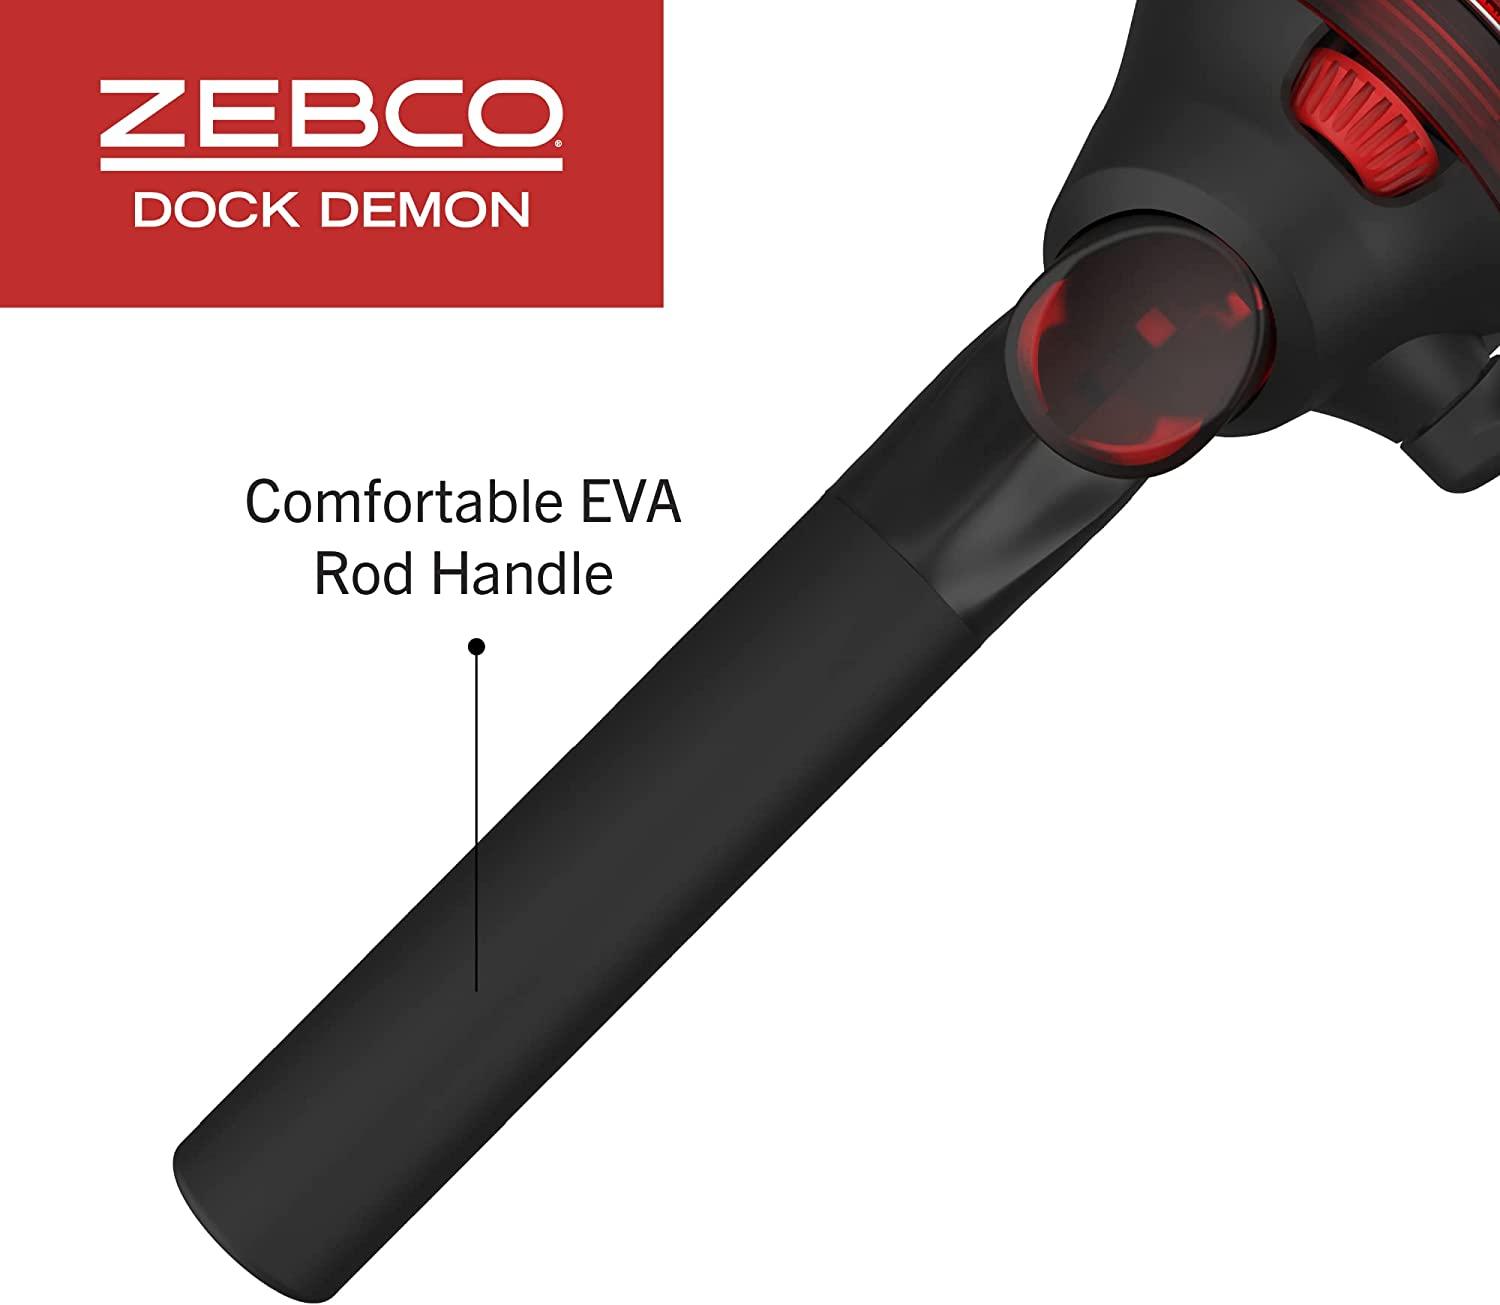 Zebco Dock Demon Spincast Reel & Rod, 30 Inch 1 Piece Fiberglass